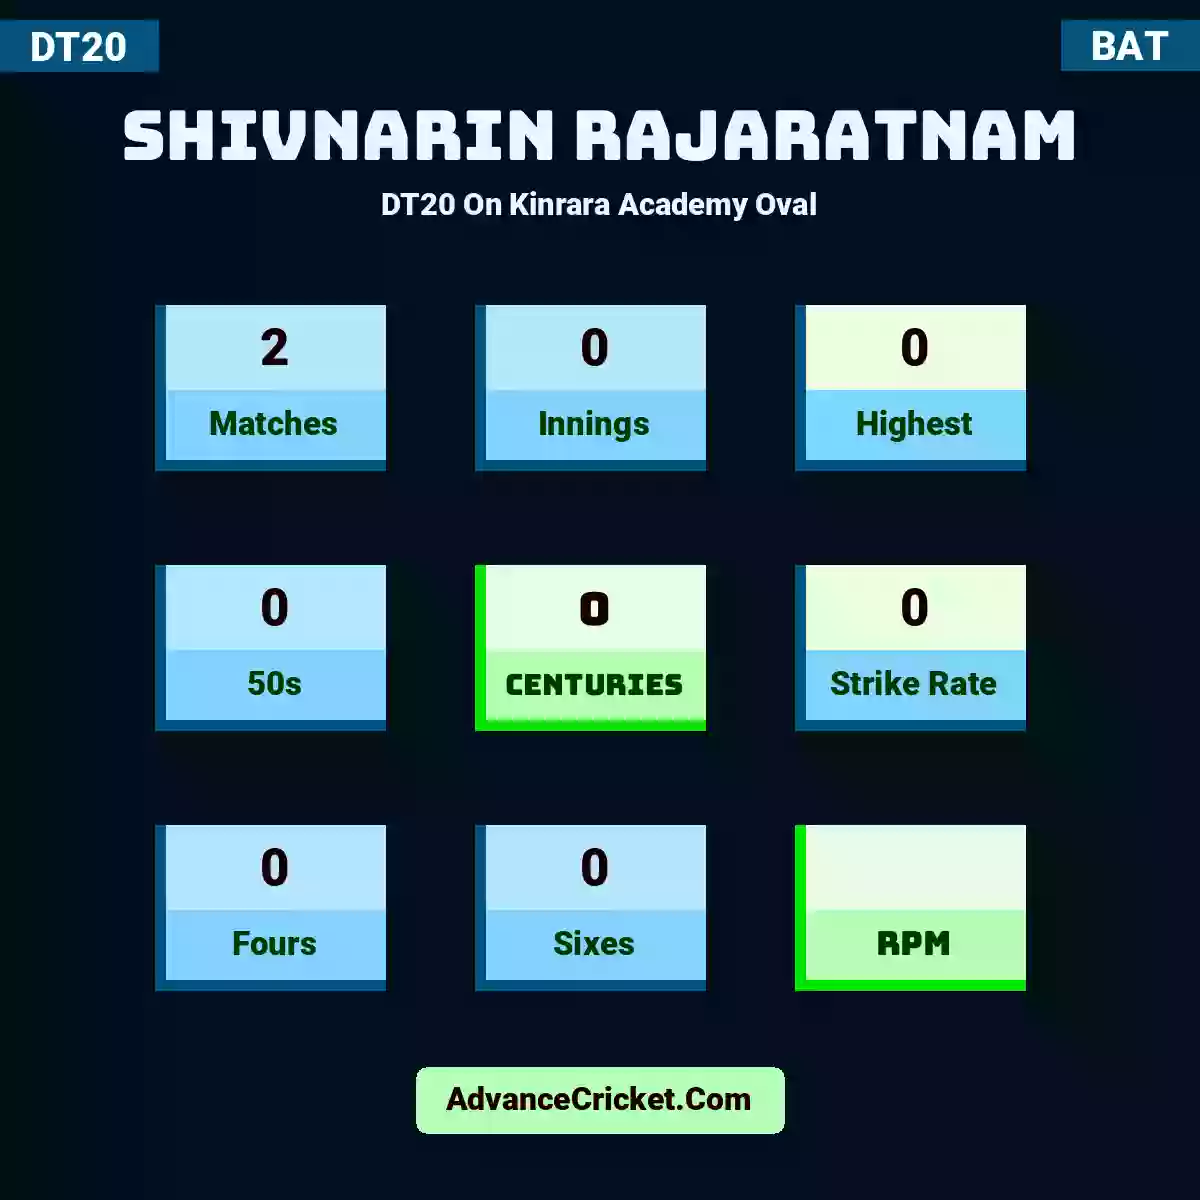 Shivnarin Rajaratnam DT20  On Kinrara Academy Oval, Shivnarin Rajaratnam played 2 matches, scored 0 runs as highest, 0 half-centuries, and 0 centuries, with a strike rate of 0. s.rajaratnam hit 0 fours and 0 sixes.